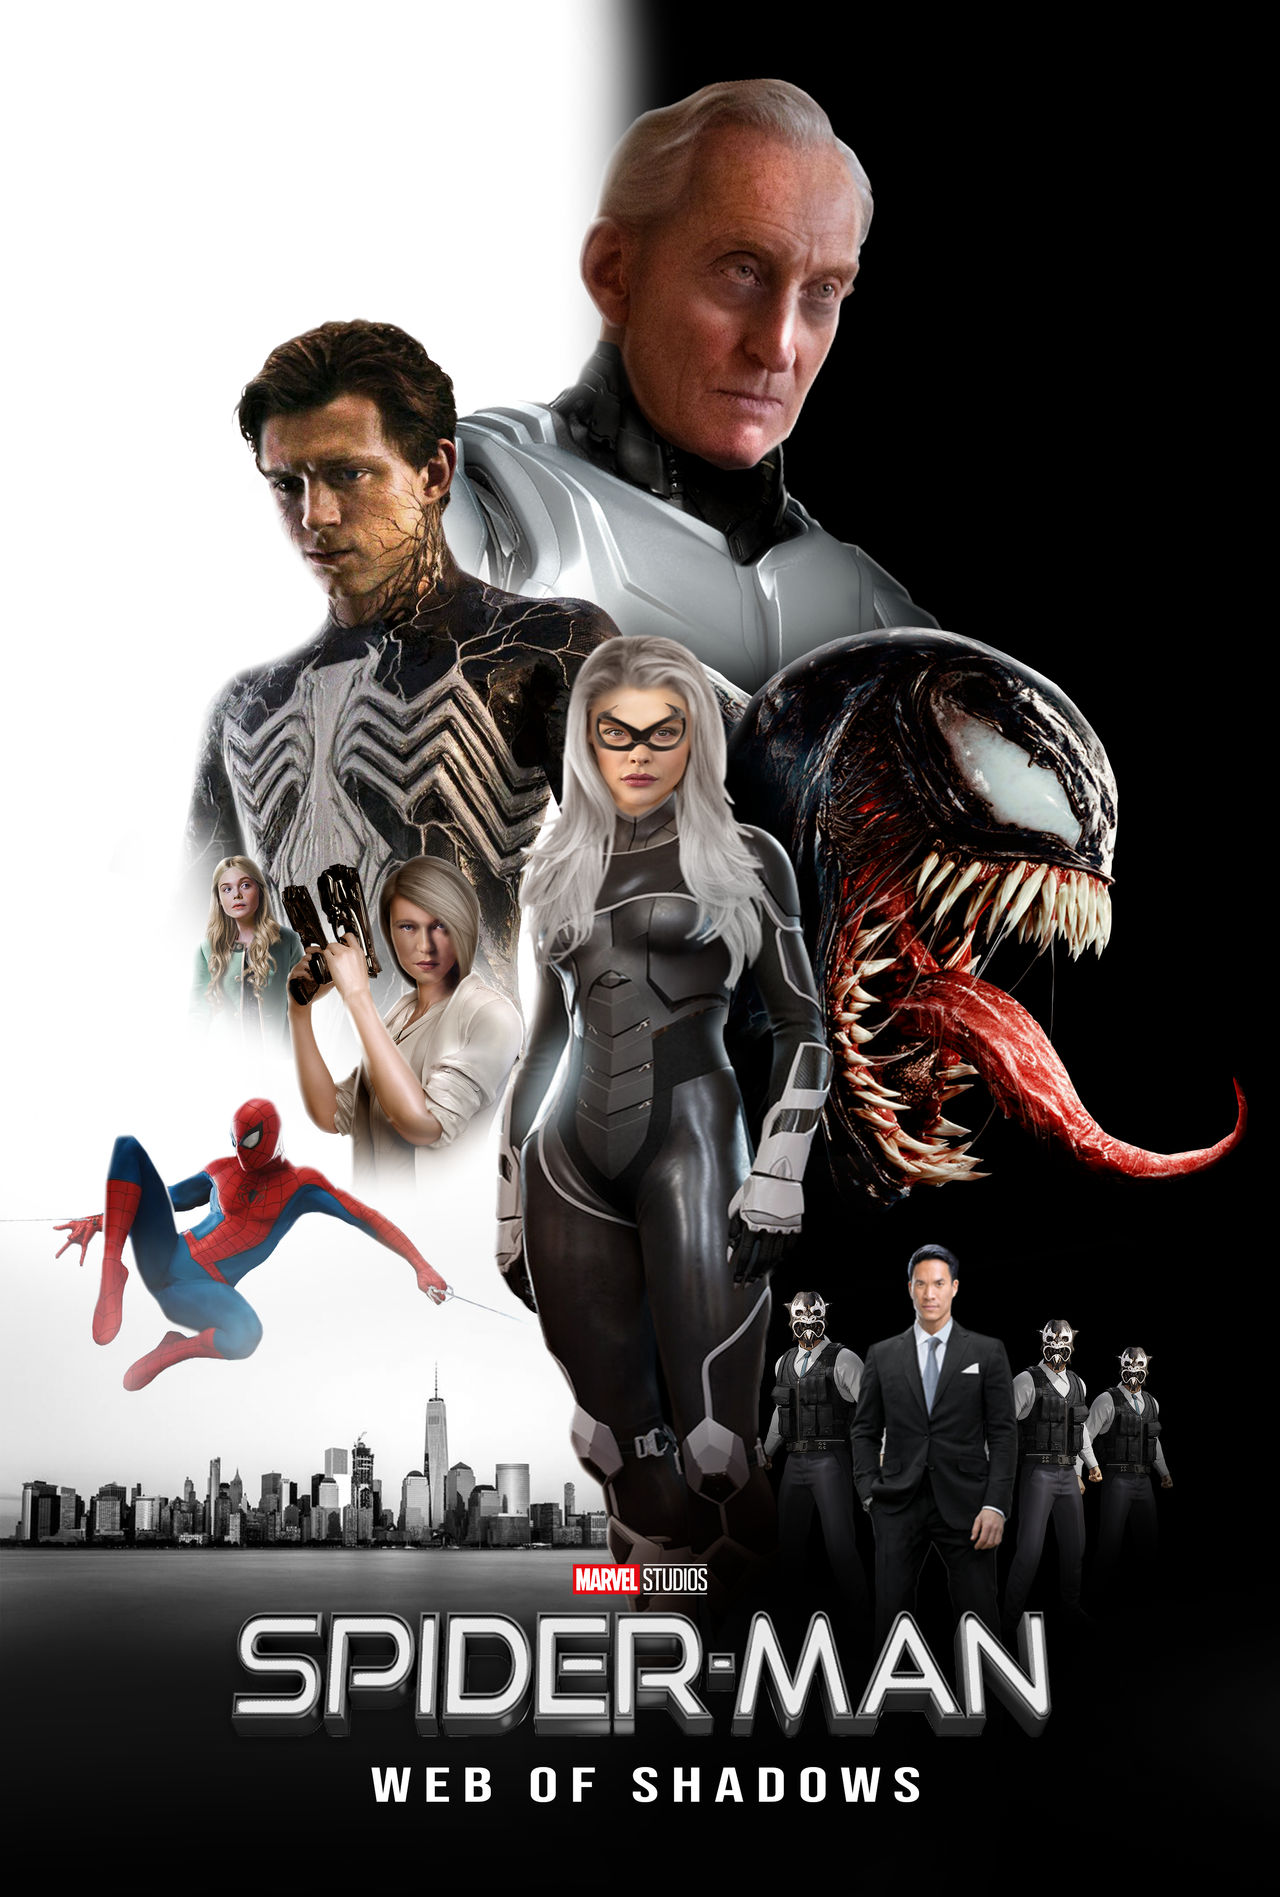 Marvels Future Phase 5 poster by SUPER-FRAME on DeviantArt